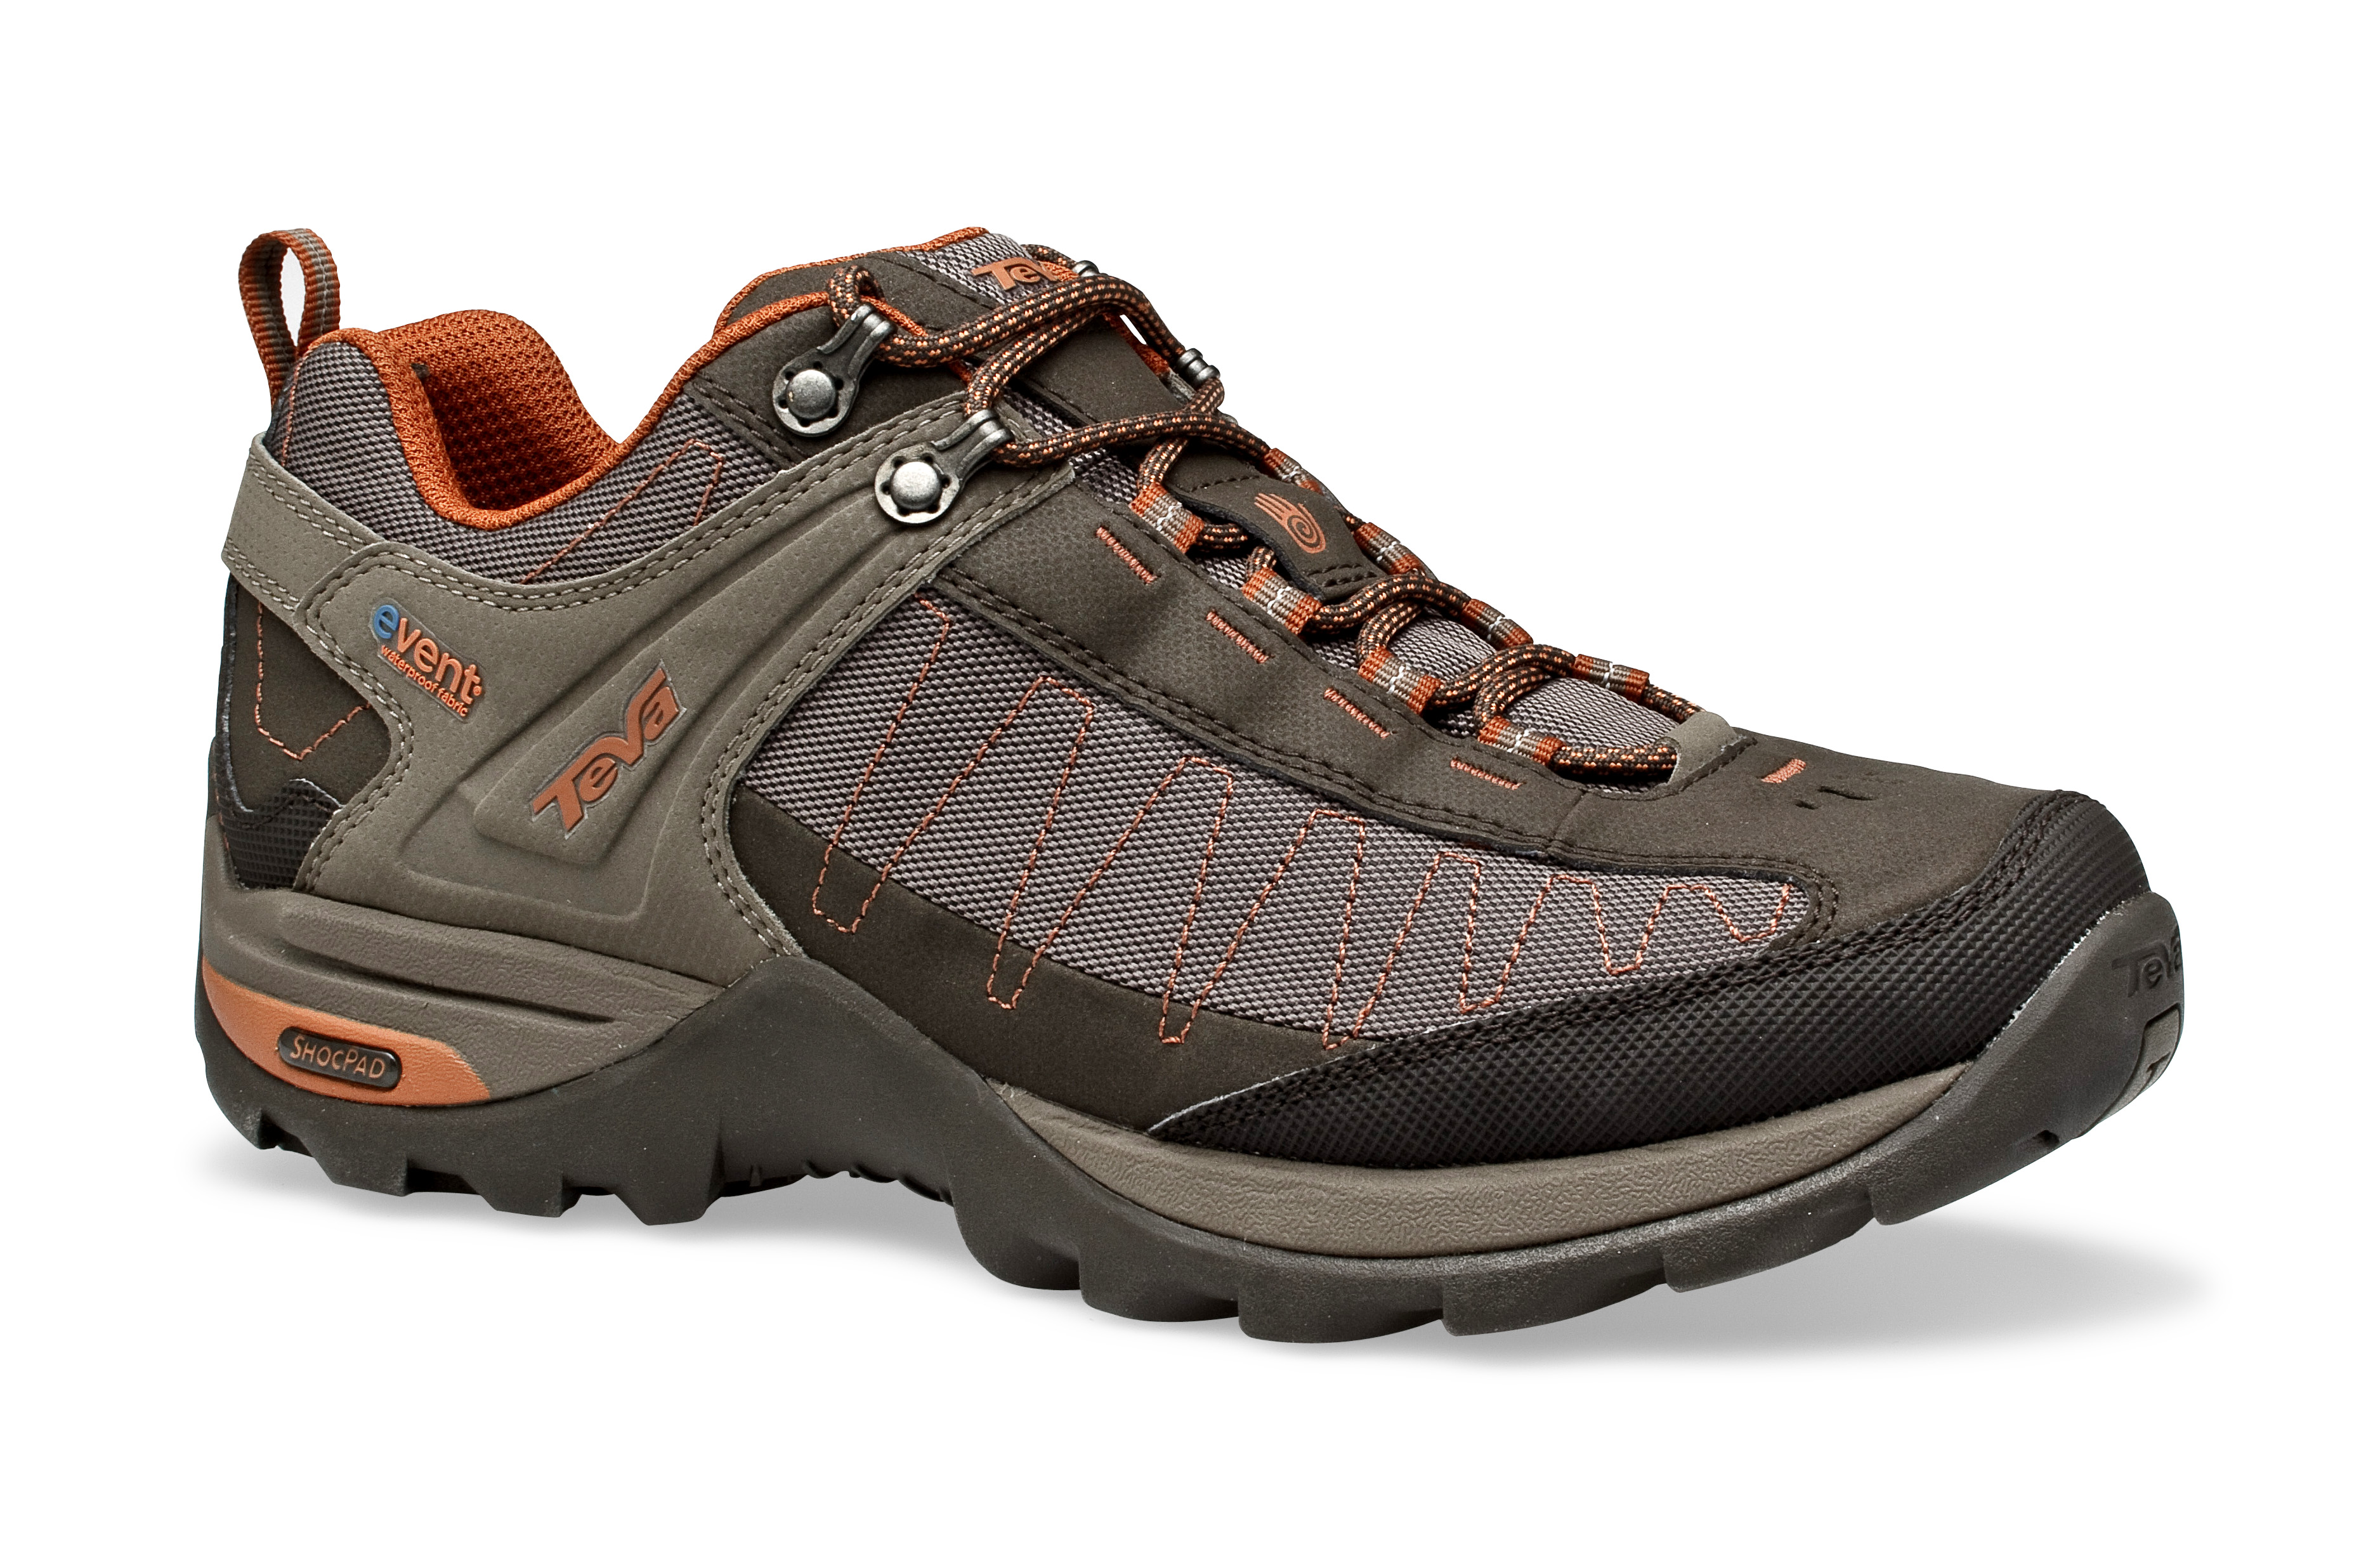 Men's Coastal Hiking Boots. Kimberfeel teram Hiking Boots. Topseller Pro.